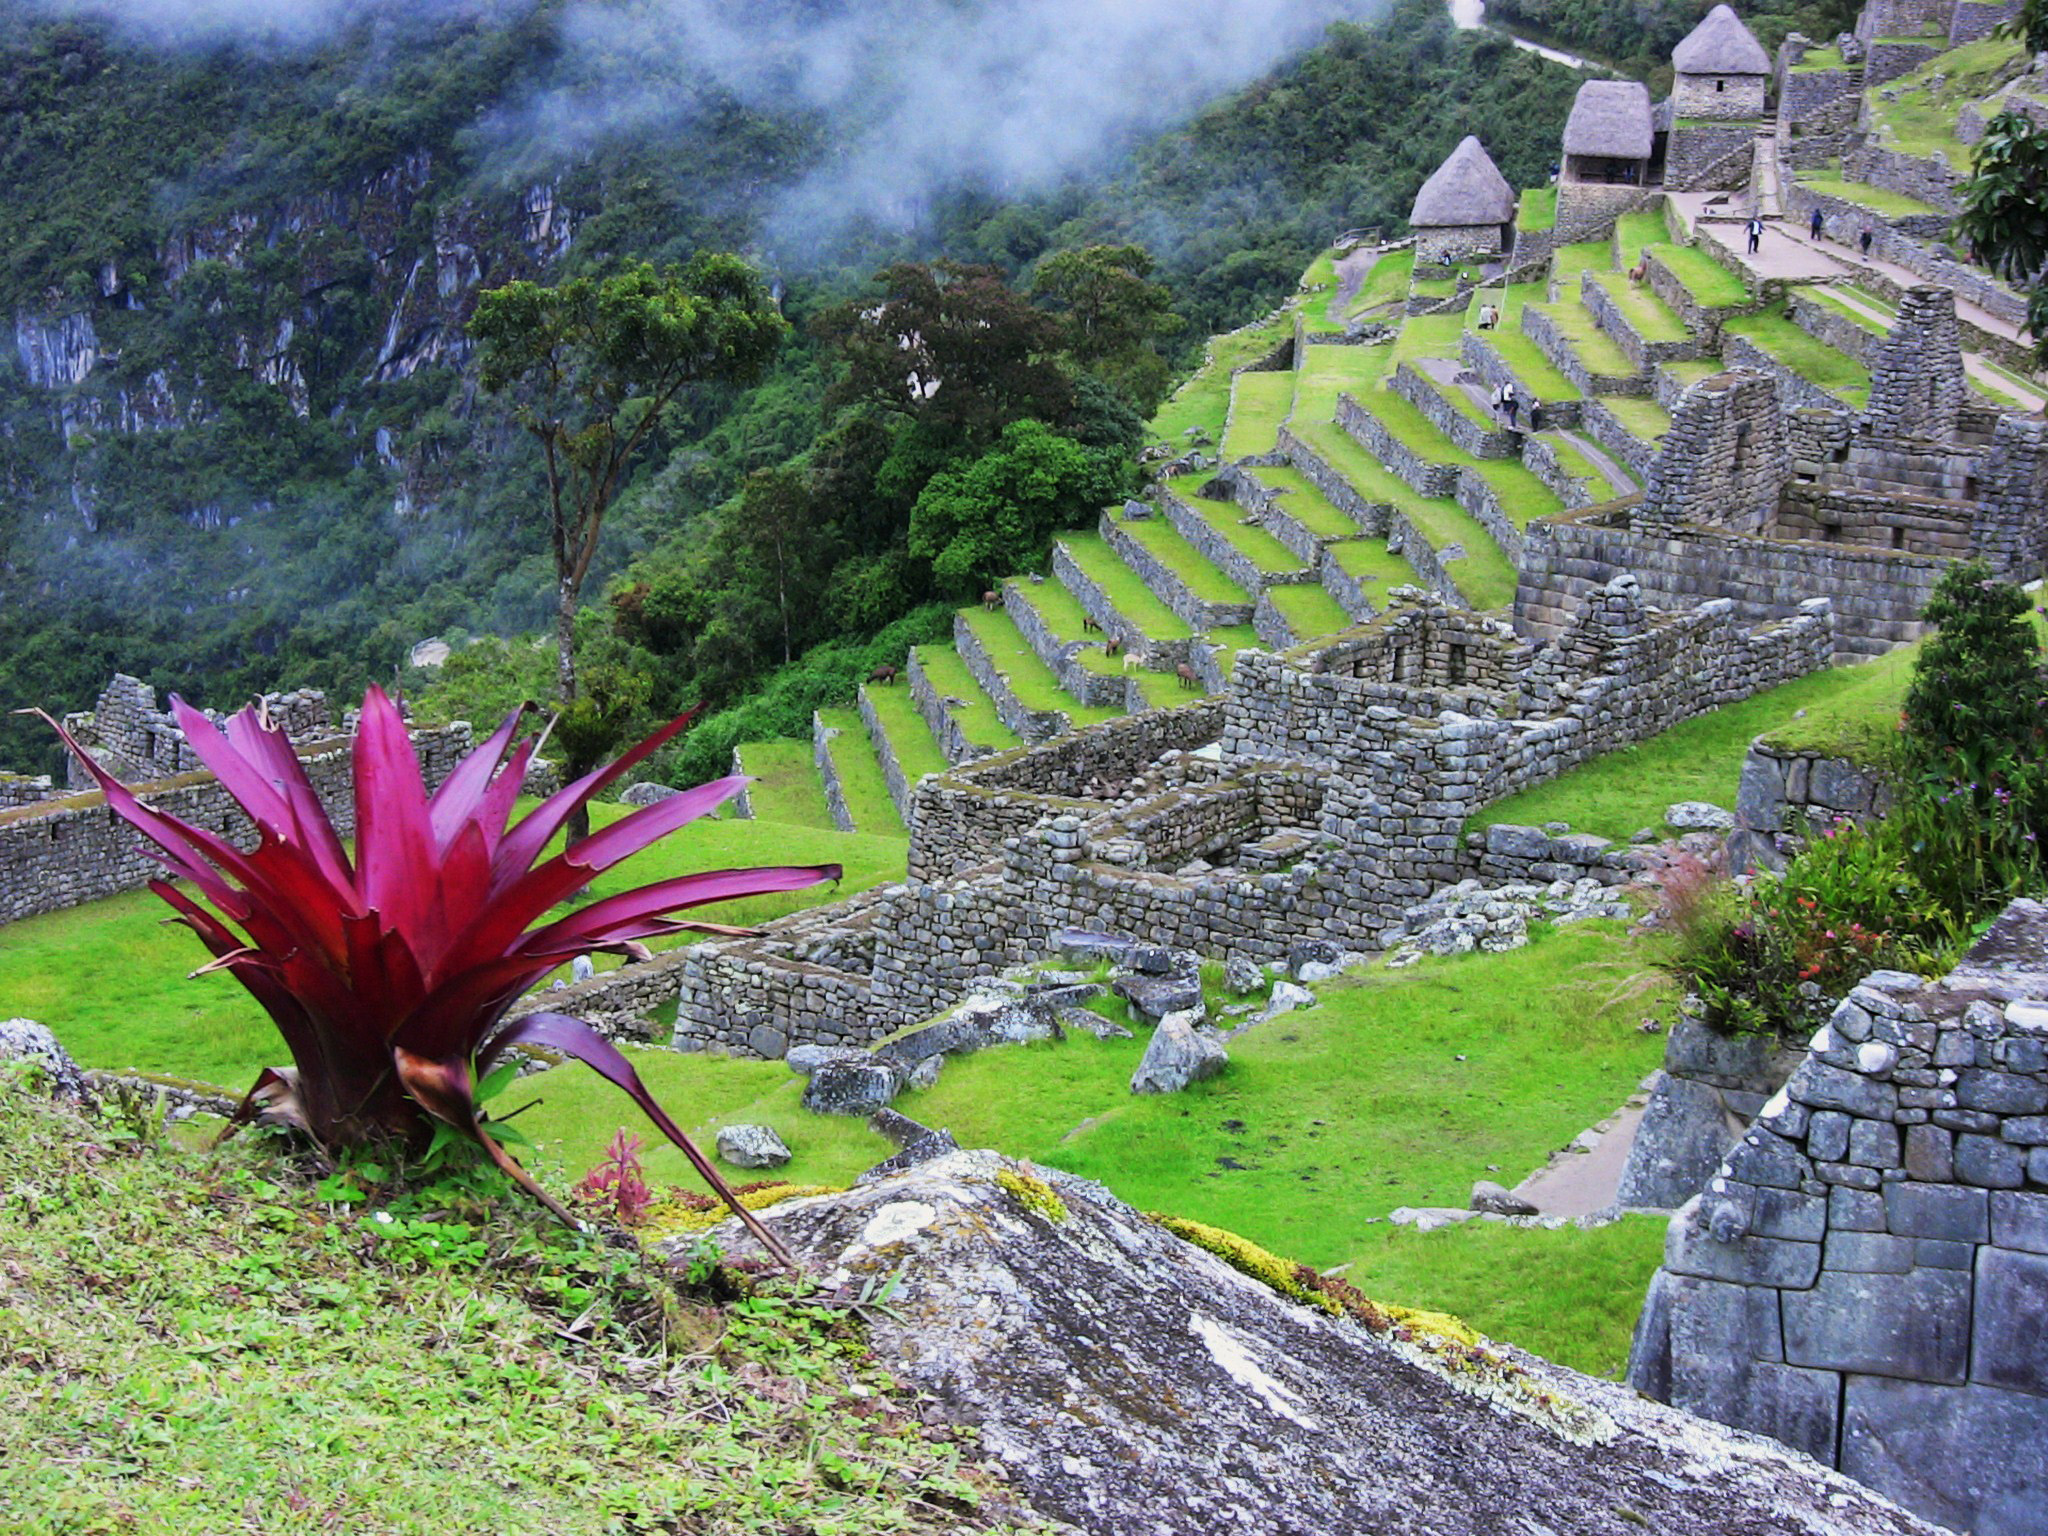 Day 2: Aguas Calientes - Machu Picchu, Perú